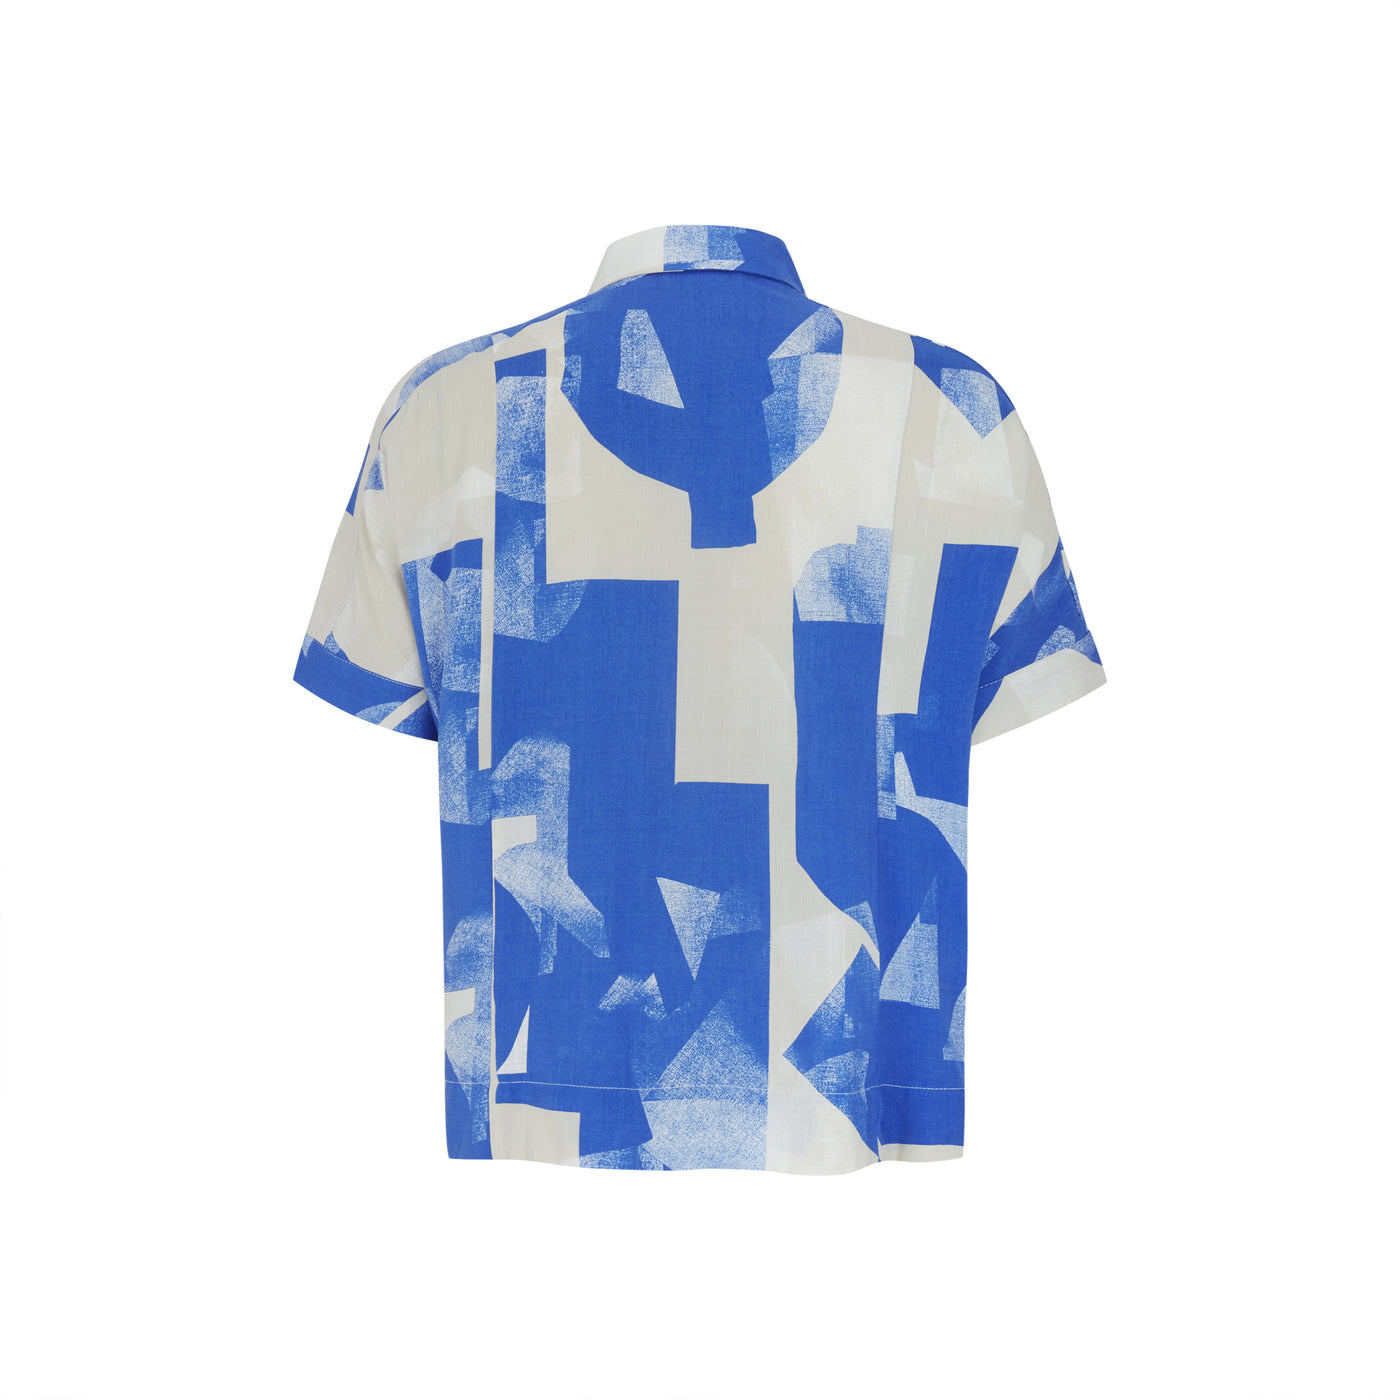 Soft Rebels SRPhoebe SS Shirt Shirts & Blouse 551 Bold Graphic Dazzling